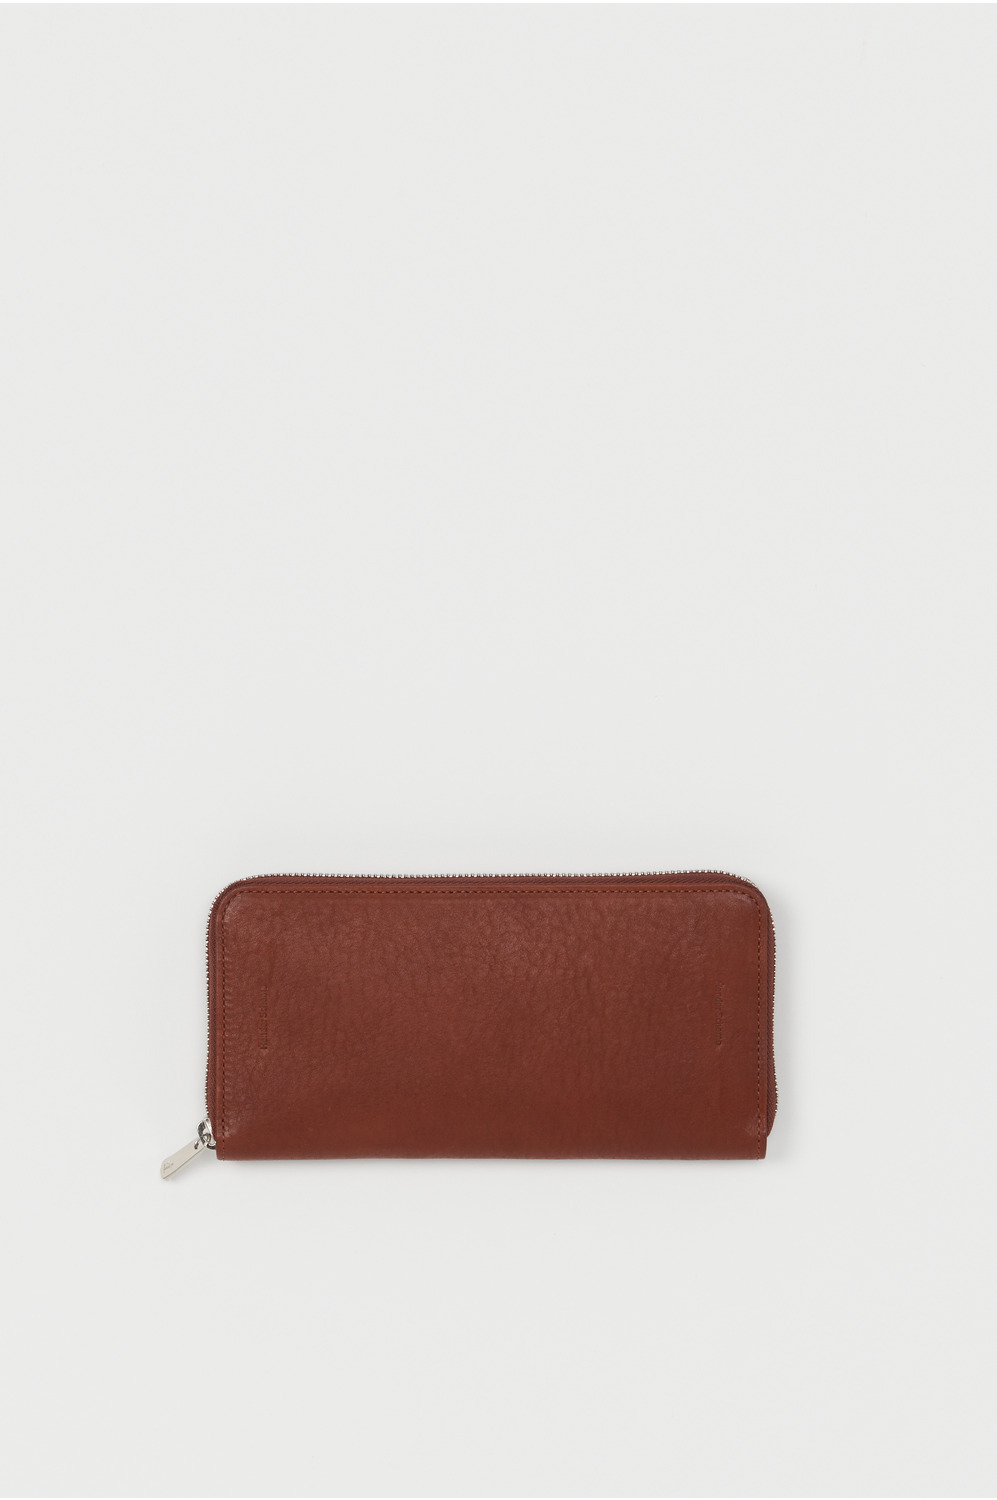 long zip purse 詳細画像 brown 1